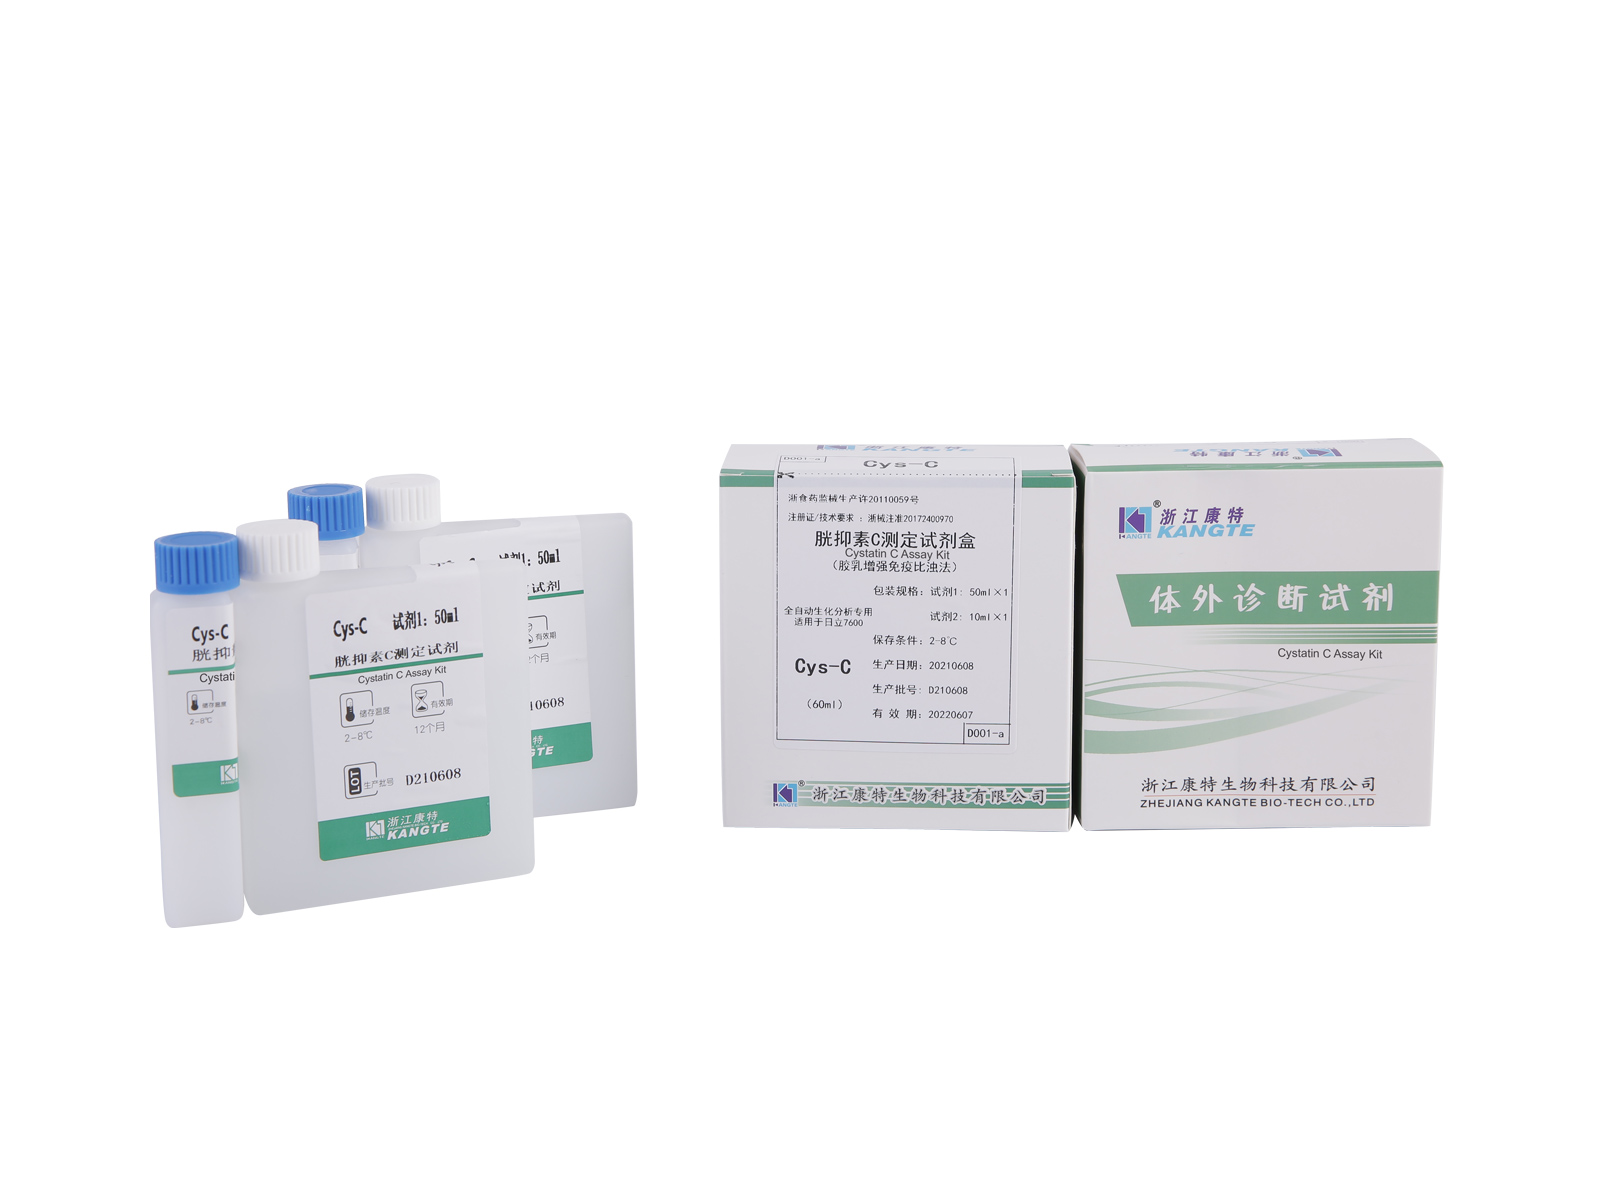 【Cys-C】 Cystatin C Assay Kit (Latex Enhanced Immunoturbidimetric Method)